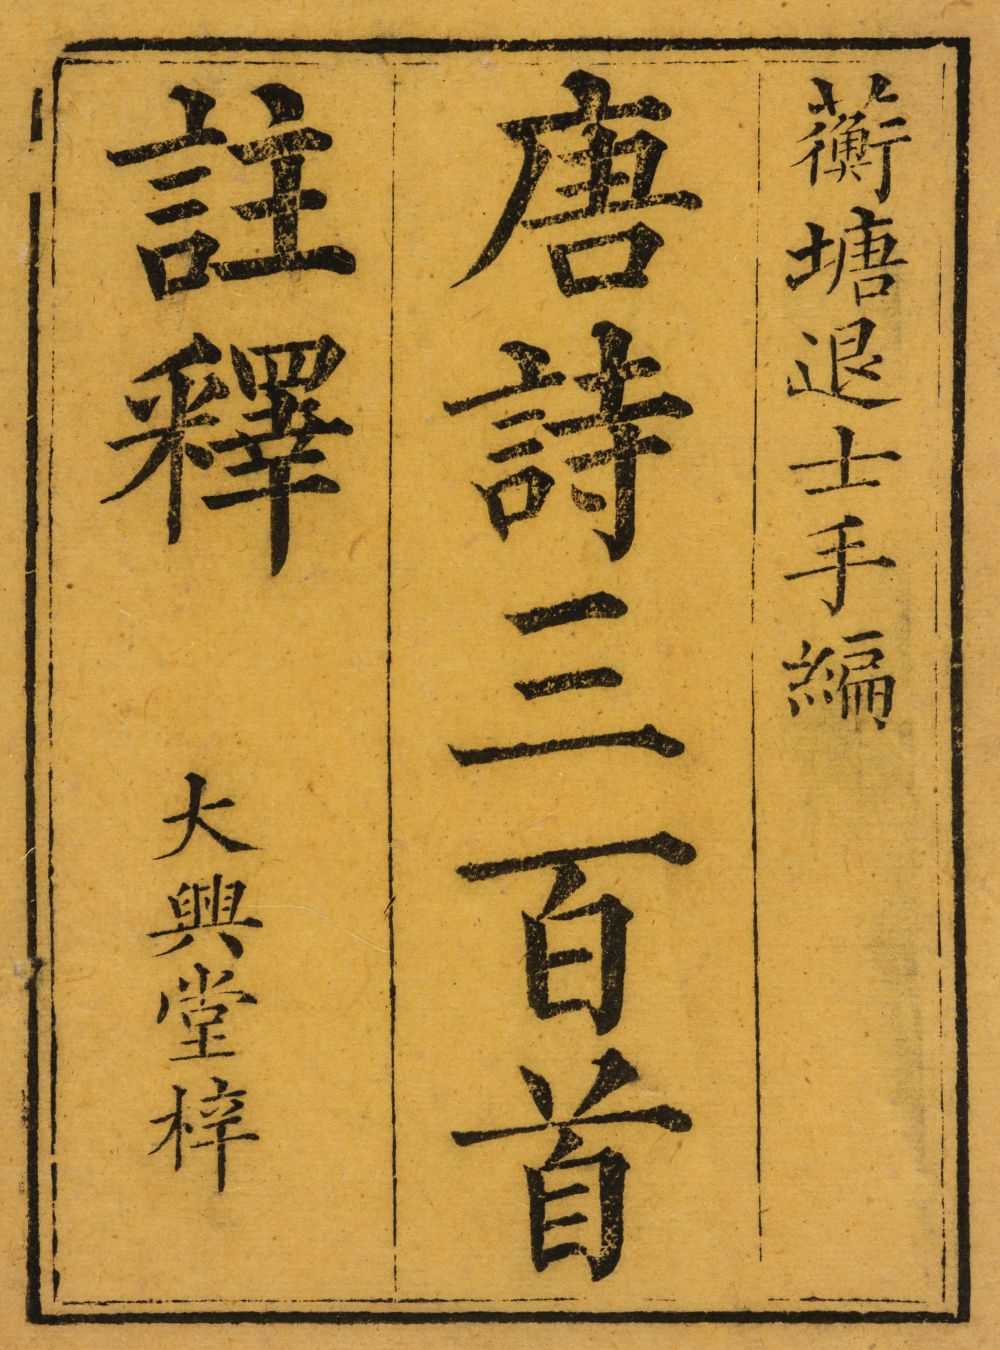 Lot 4 - China. Tangshi sanbai shou ['Three Hundred Tang Poems', 19th/20th century